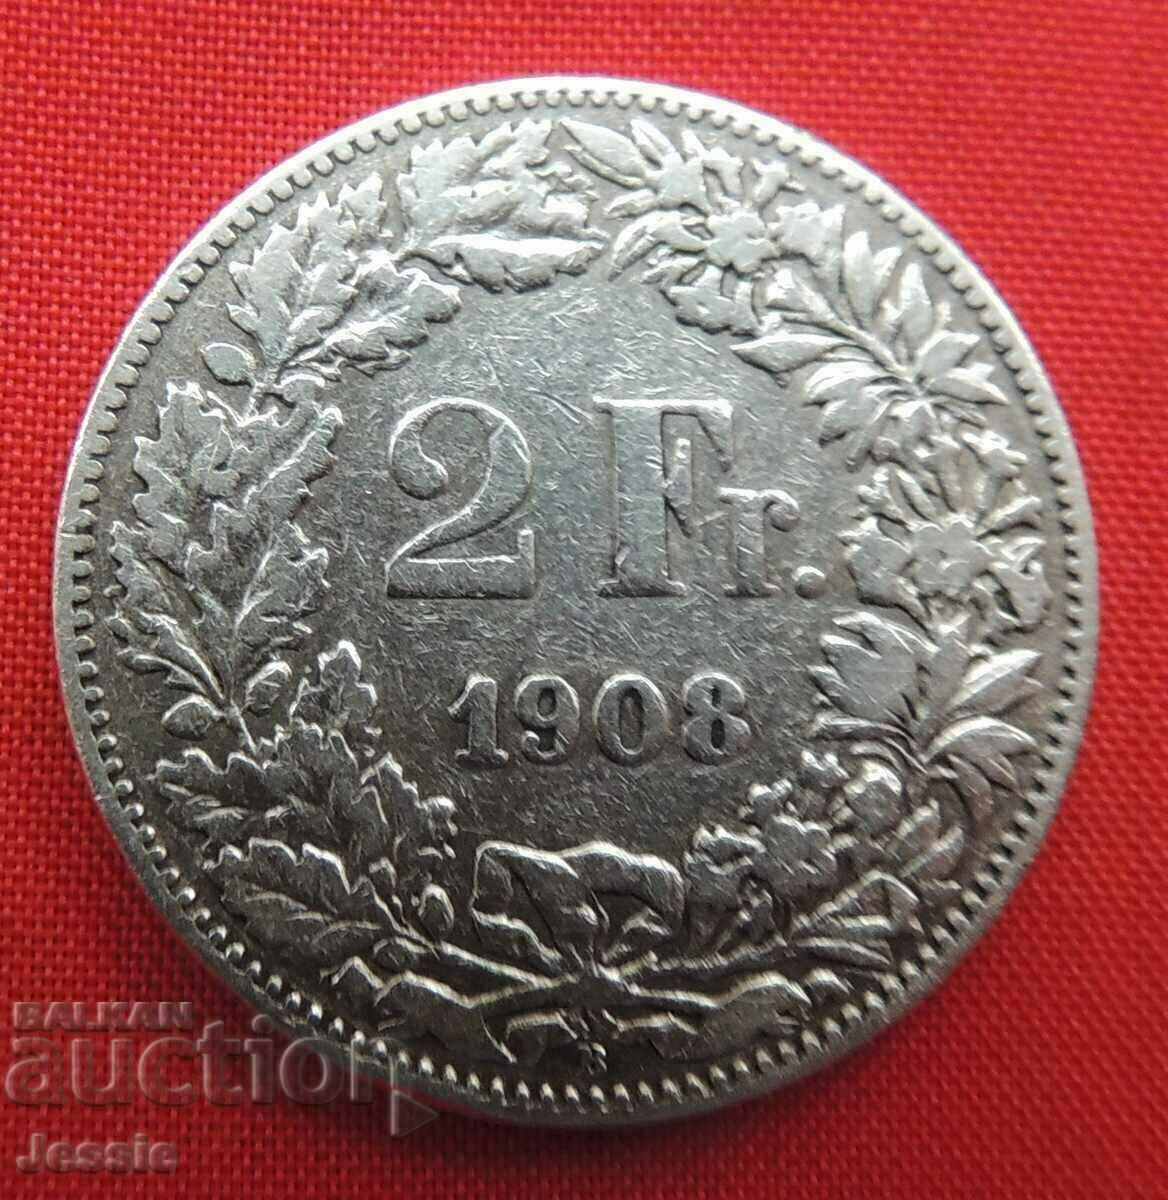 2 Francs 1908 B Switzerland Silver